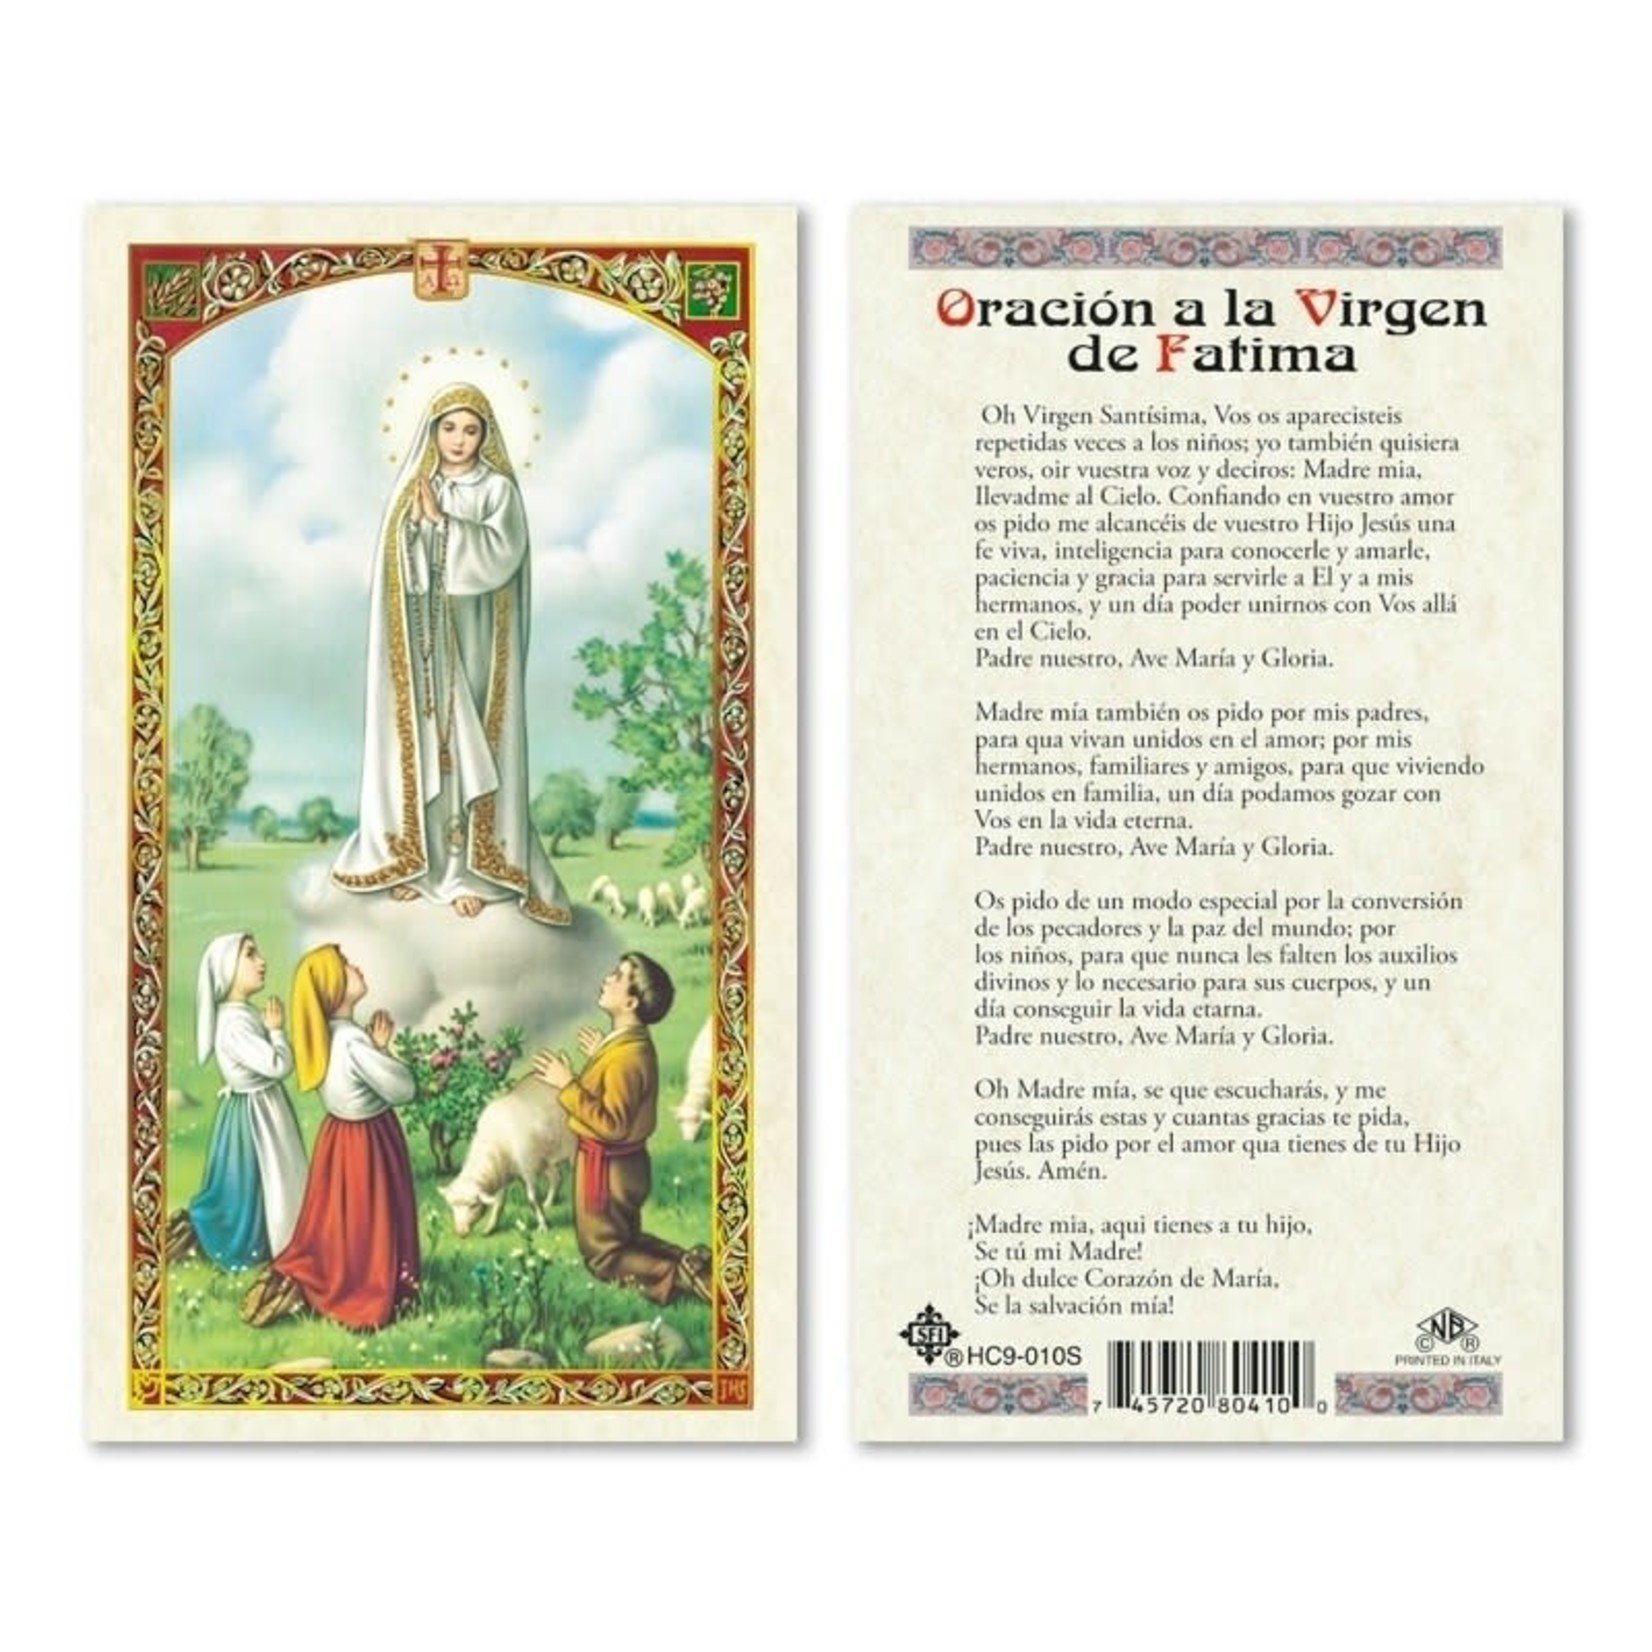 Nuestra Señora de Fatima Prayer Card (Spanish)